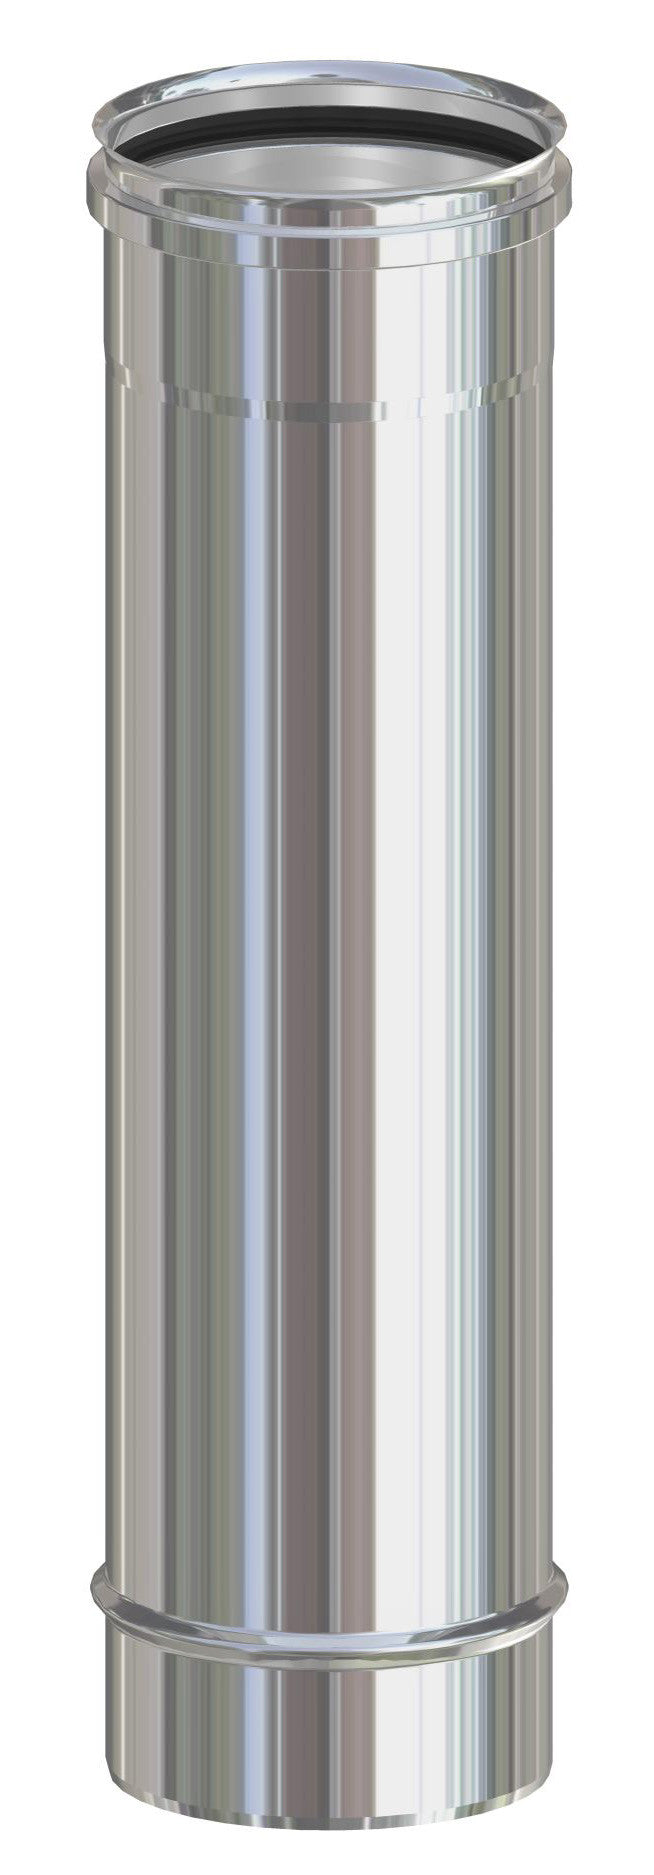 Tubo inox aisi 304 cm. 50 d. 80  x pellet